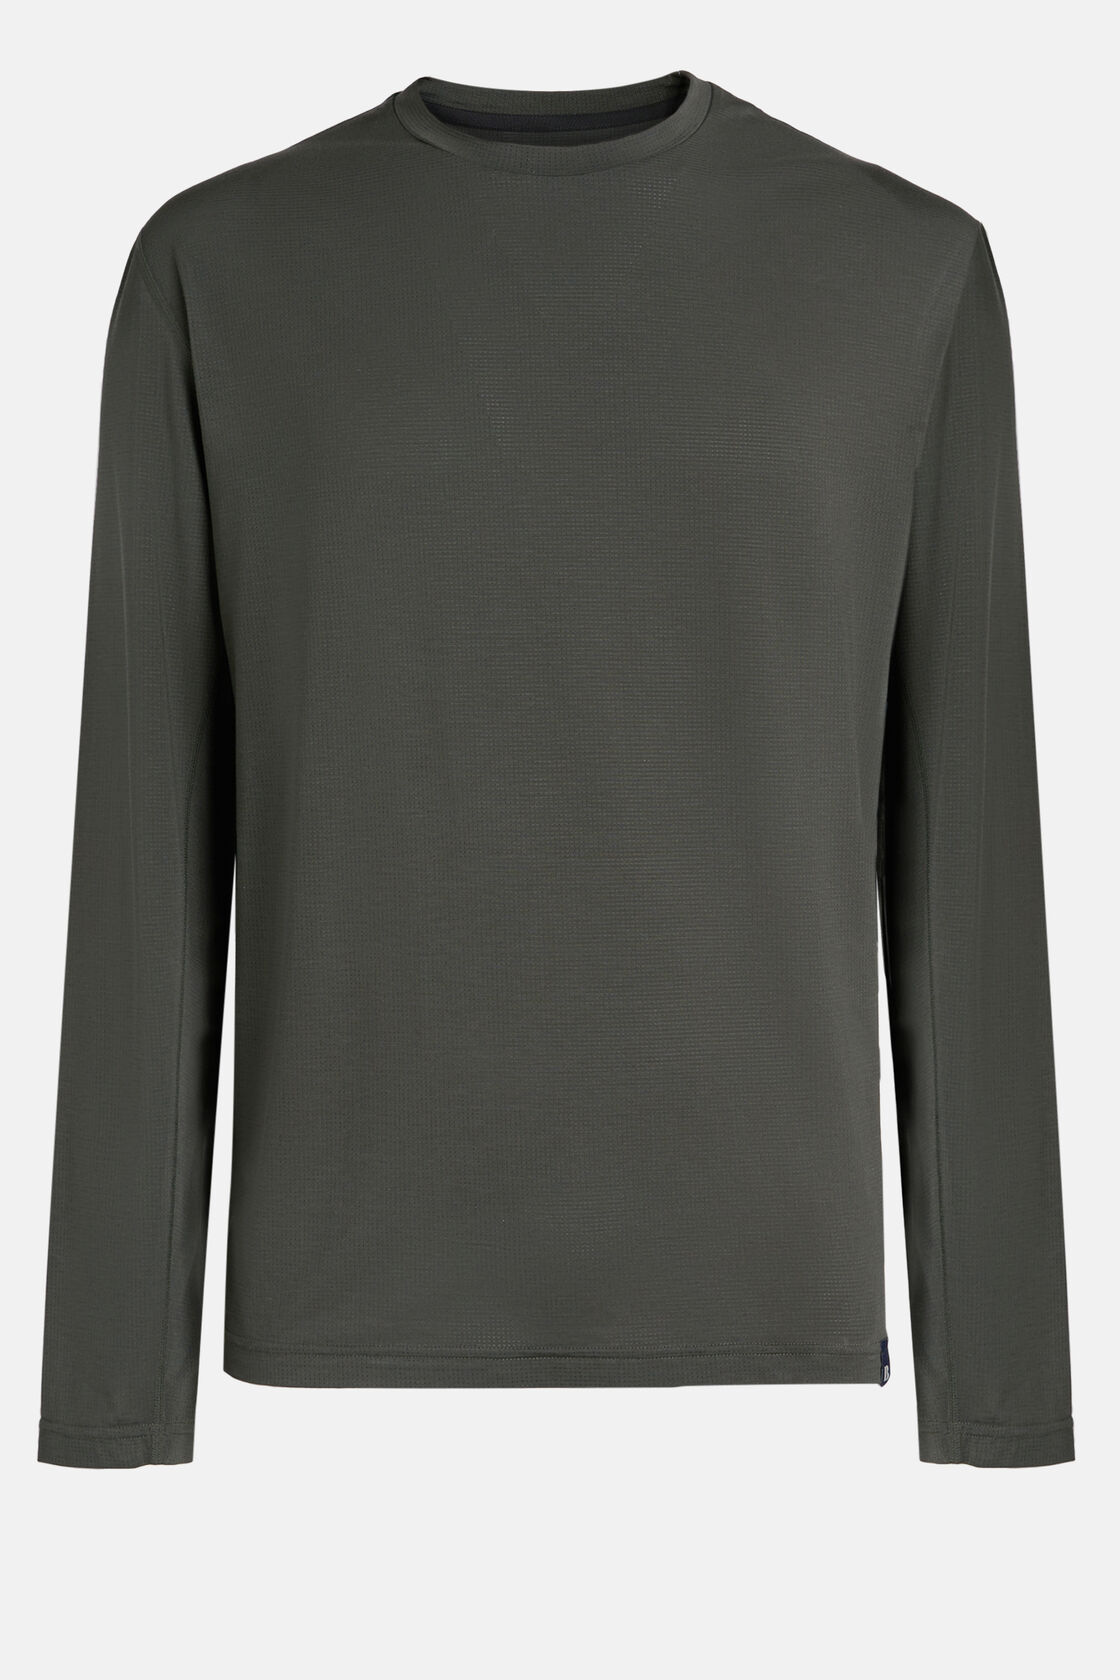 Long-Sleeved Stretch Carbon Modal T-Shirt, , hi-res